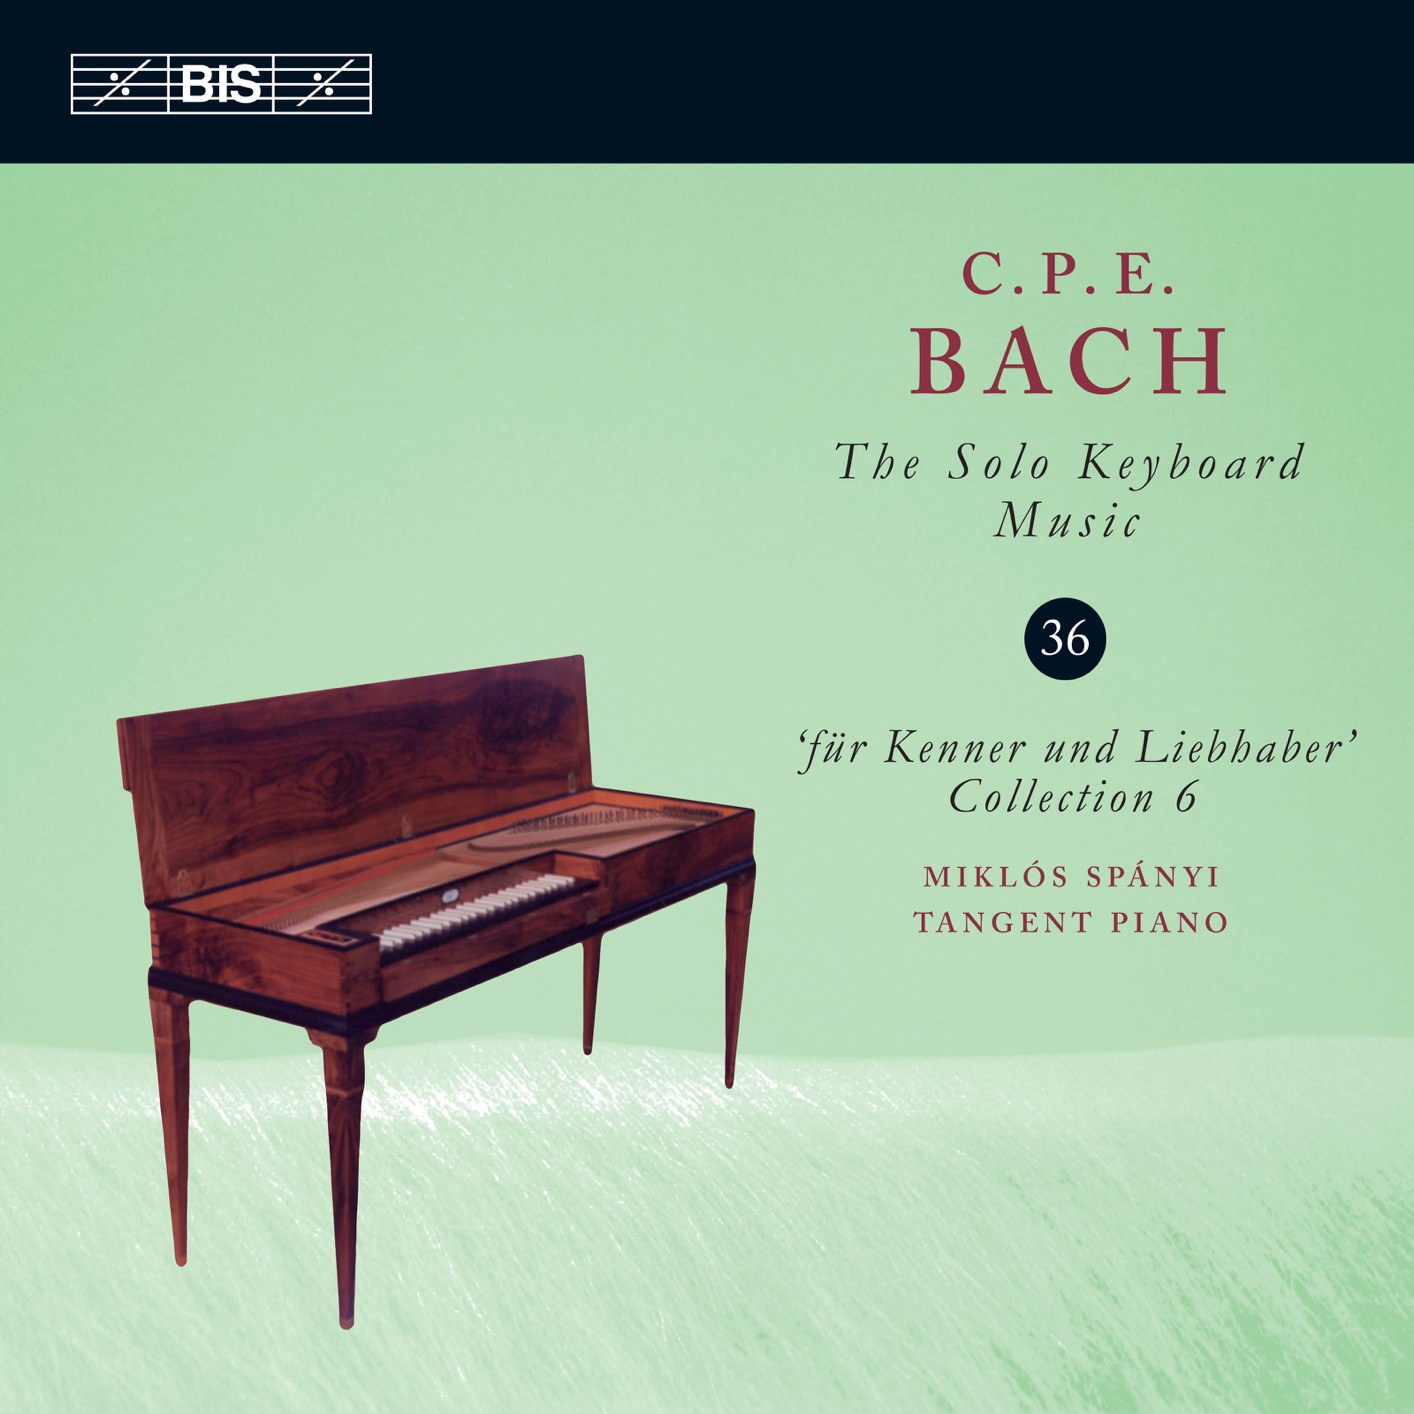 Miklos Spanyi - C.P.E. Bach: The Solo Keyboard Music, Vol. 36 (2018) [FLAC 24bit/96kHz]